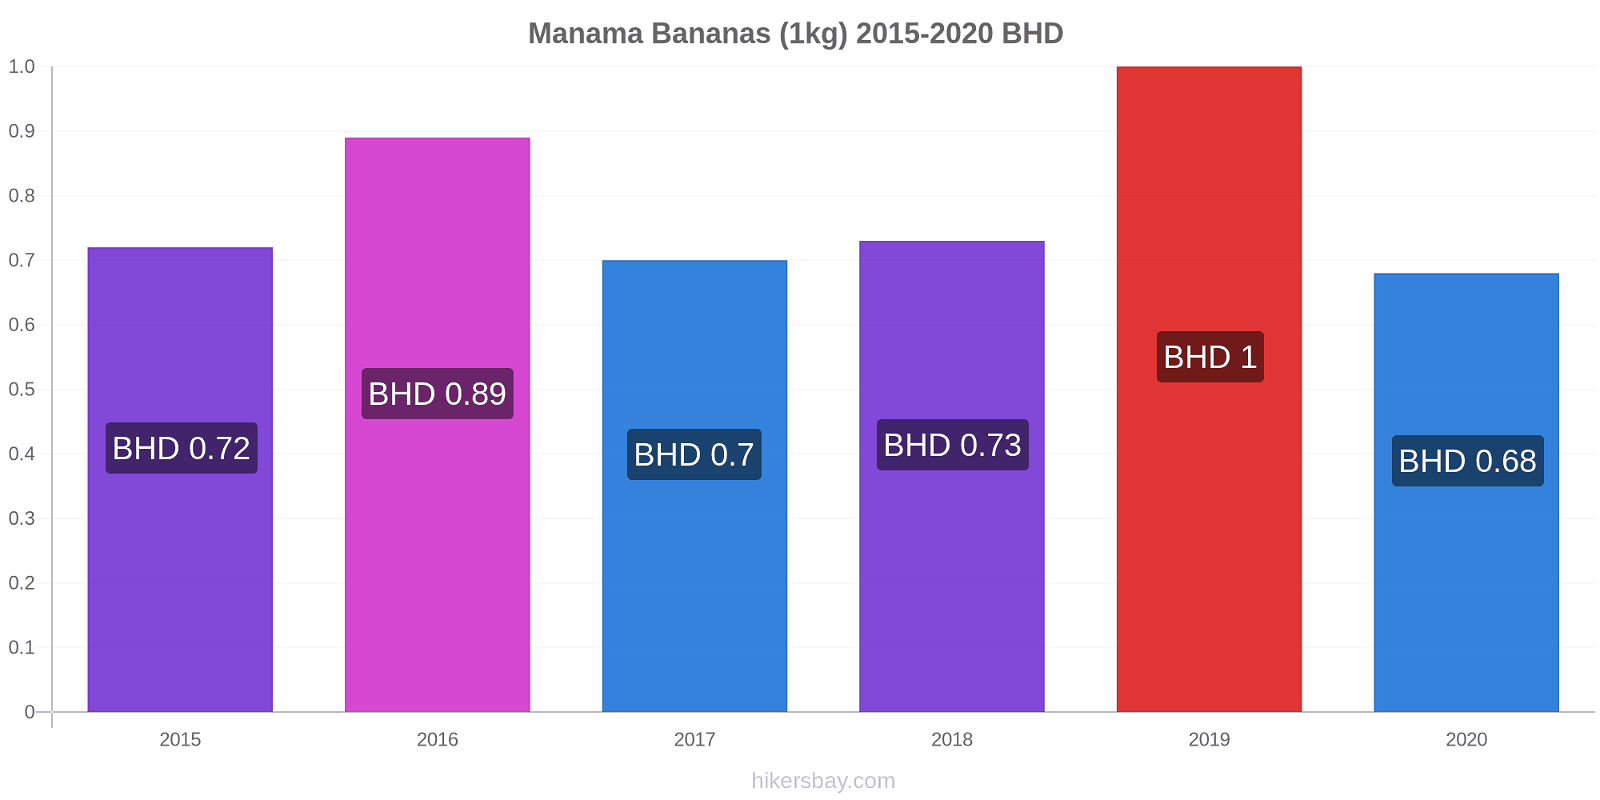 Manama price changes Bananas (1kg) hikersbay.com